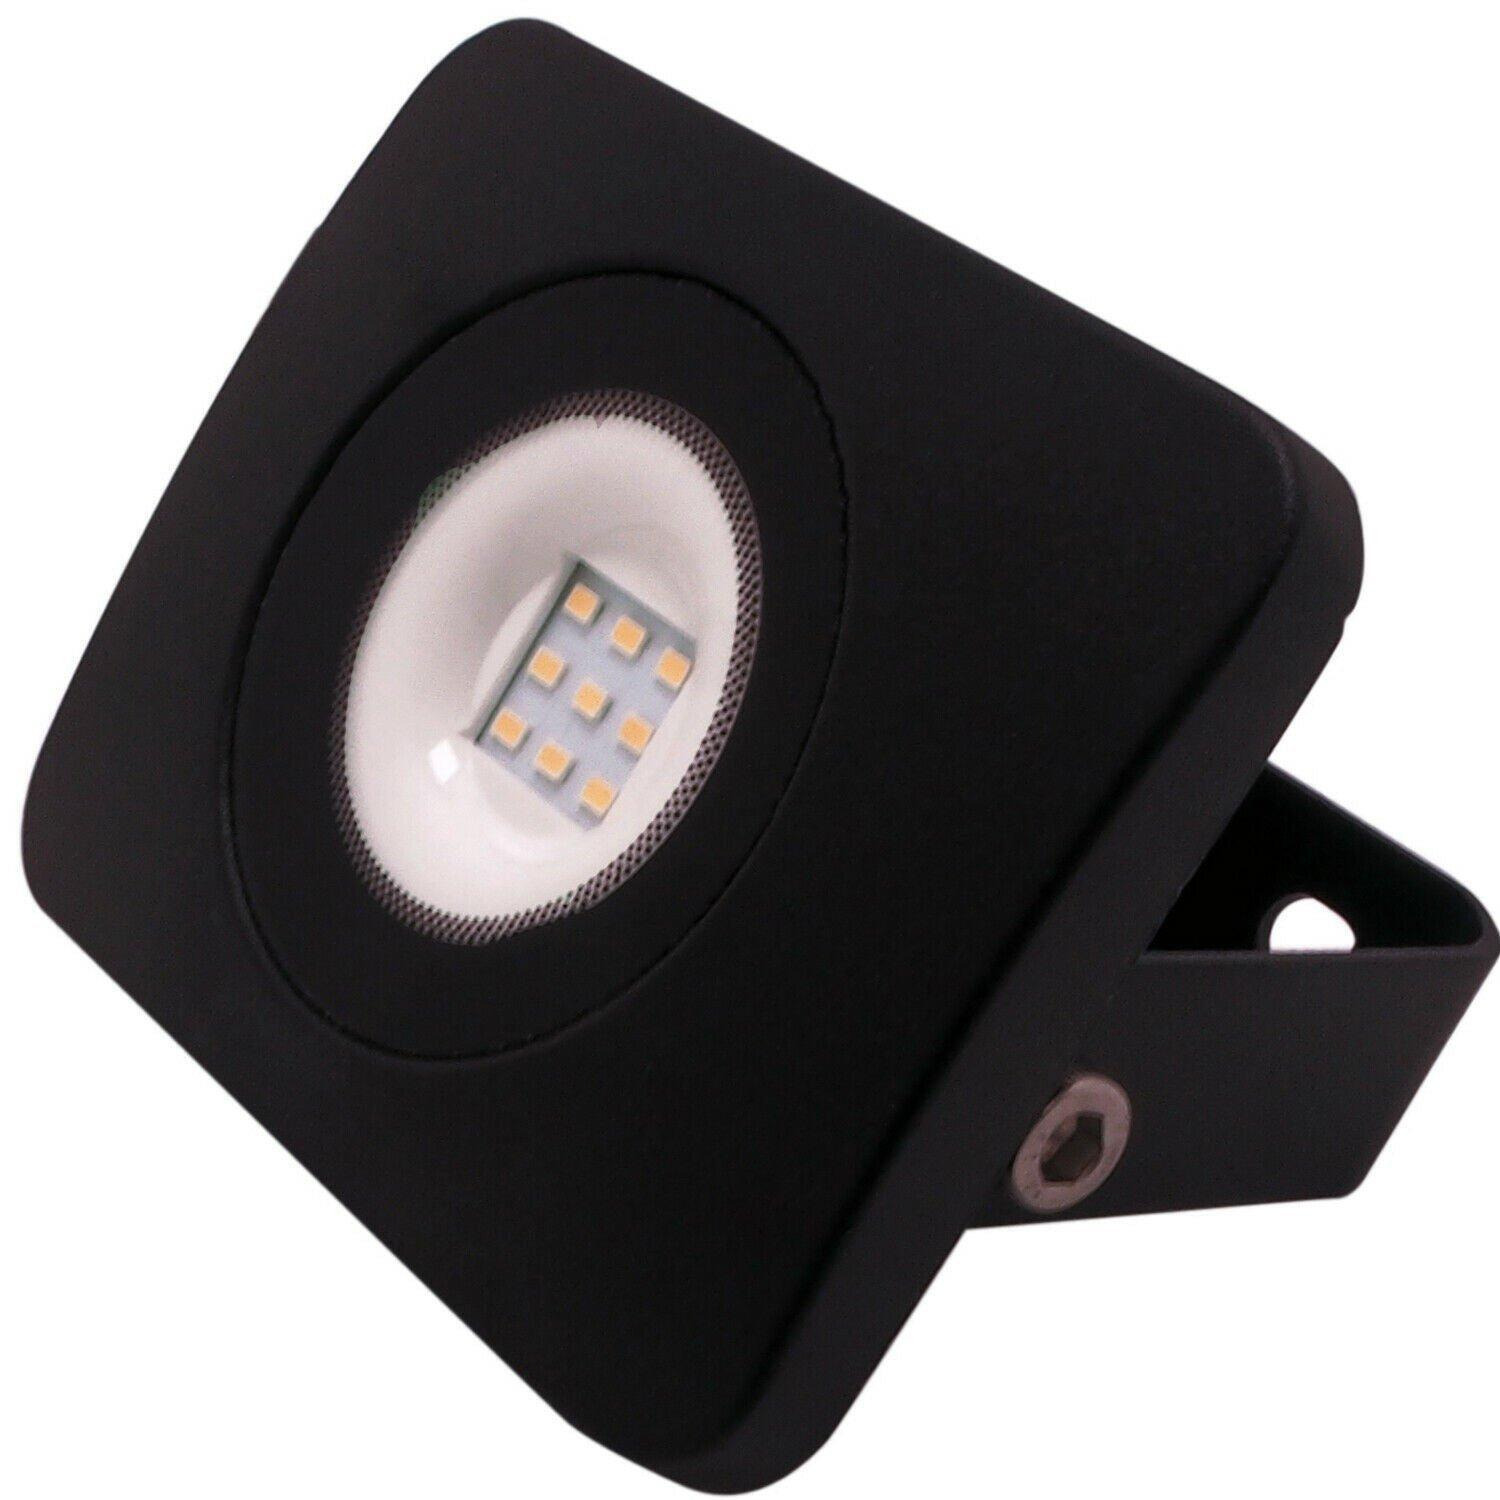 PREMIUM Slim Outdoor 50W LED Floodlight Bright Security IP65 Waterproof Light - image 1